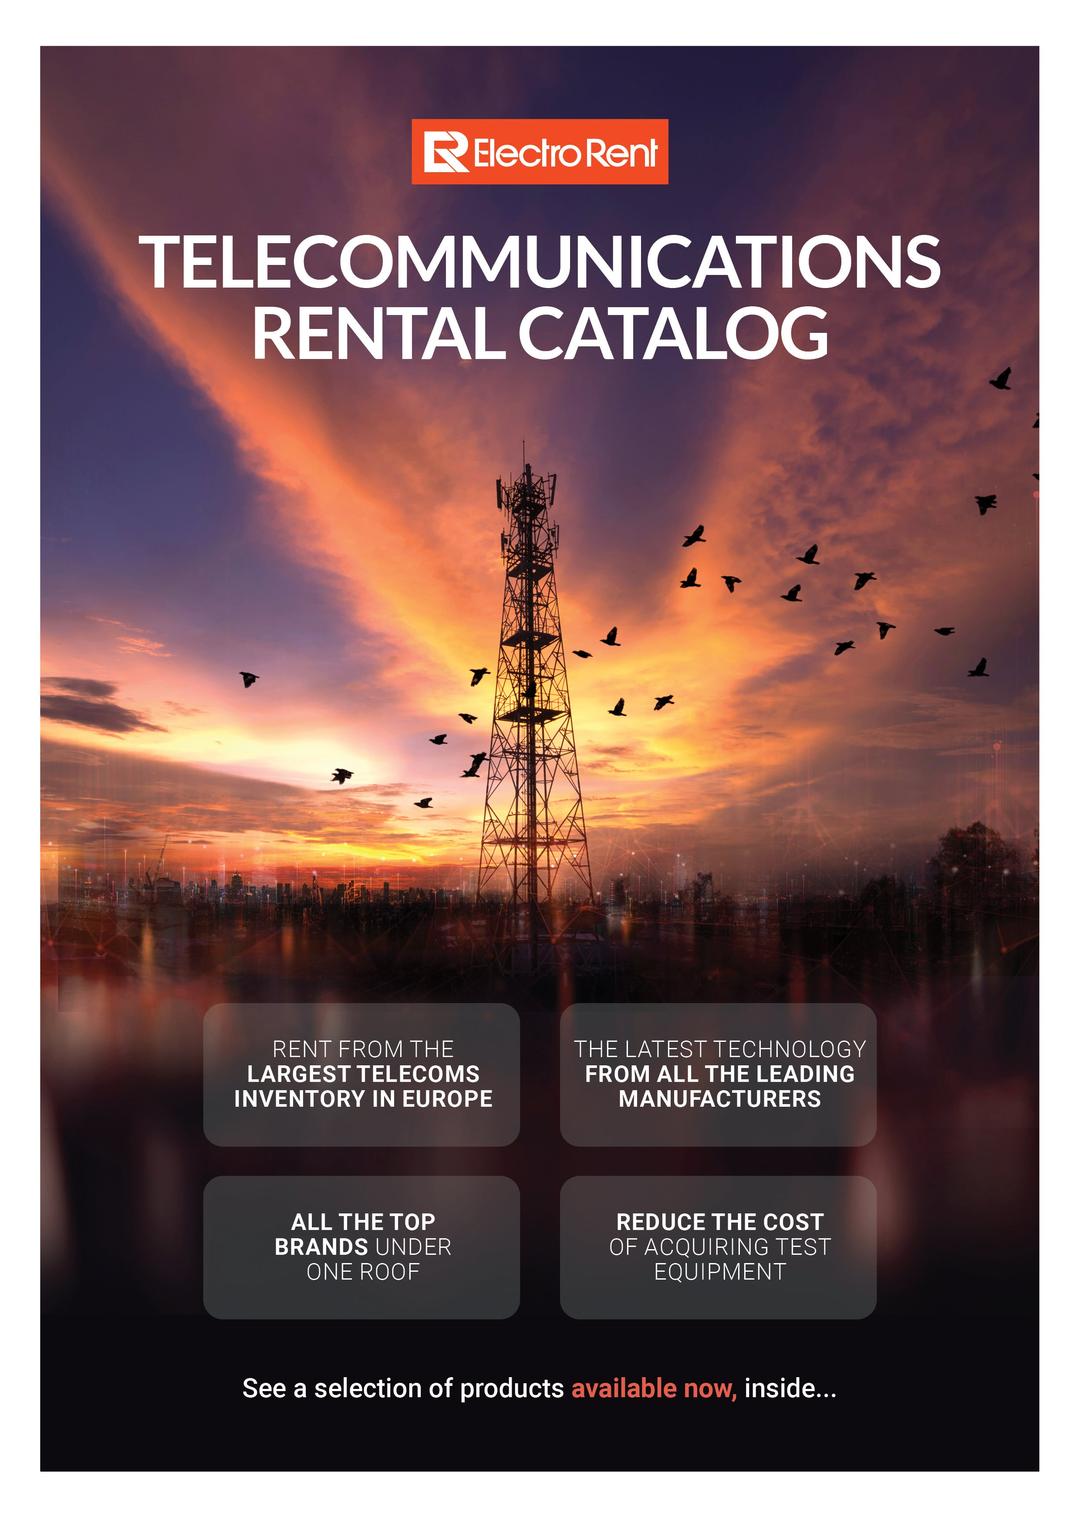 Electro Rent 2022 Telecom Catalogue, image